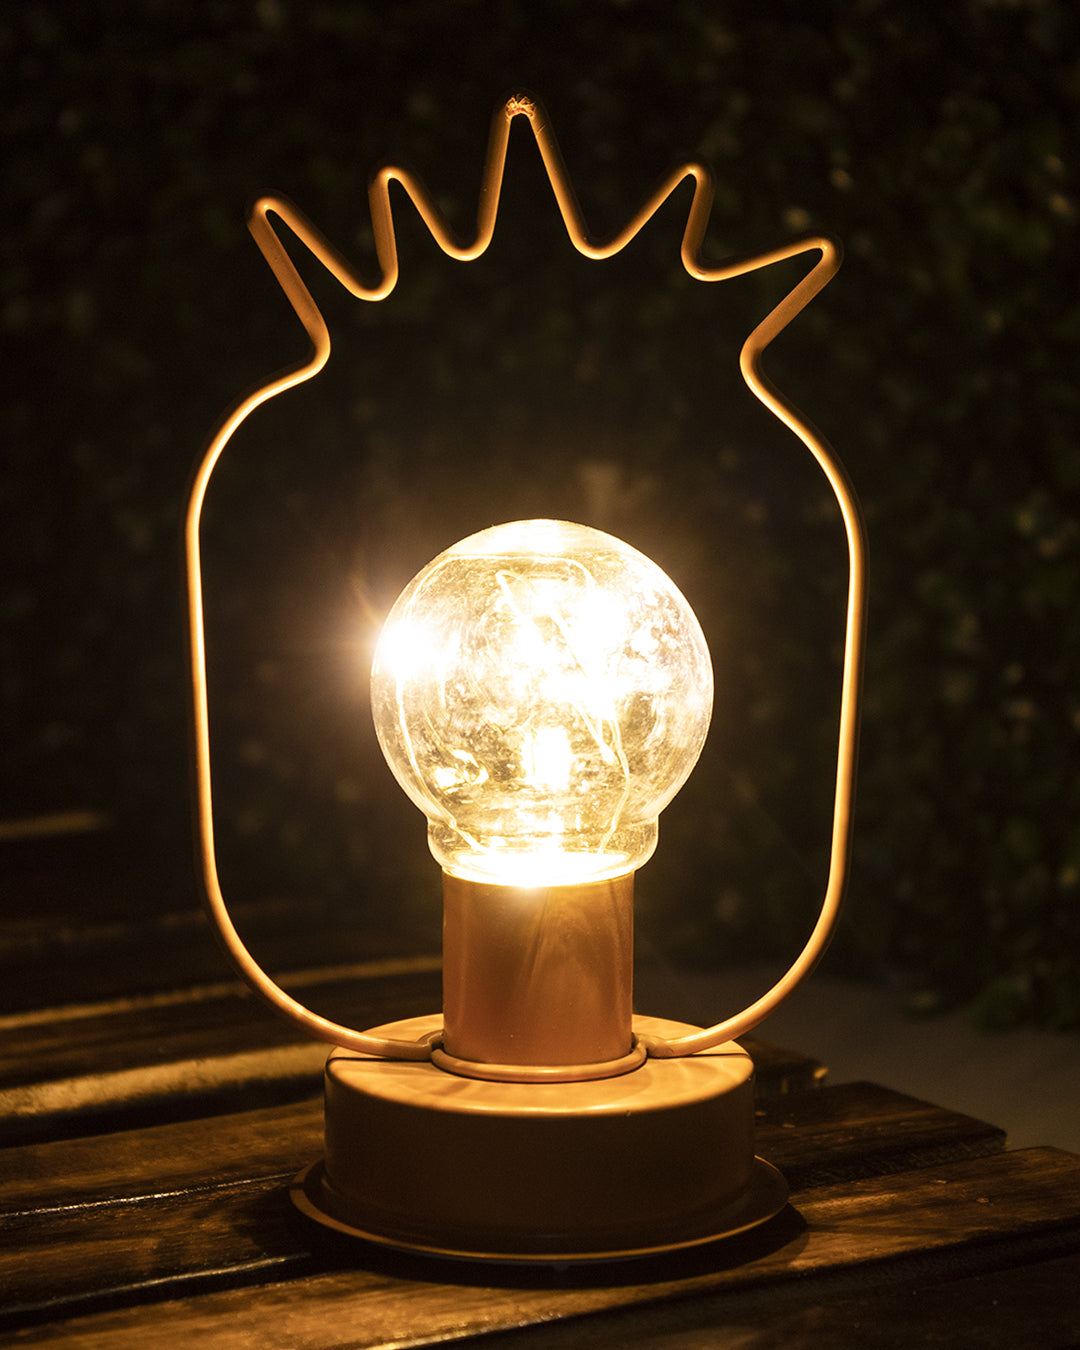 VON CASA Decorative Bulb, Light, Cordless, Battery Operated, Orange, Iron